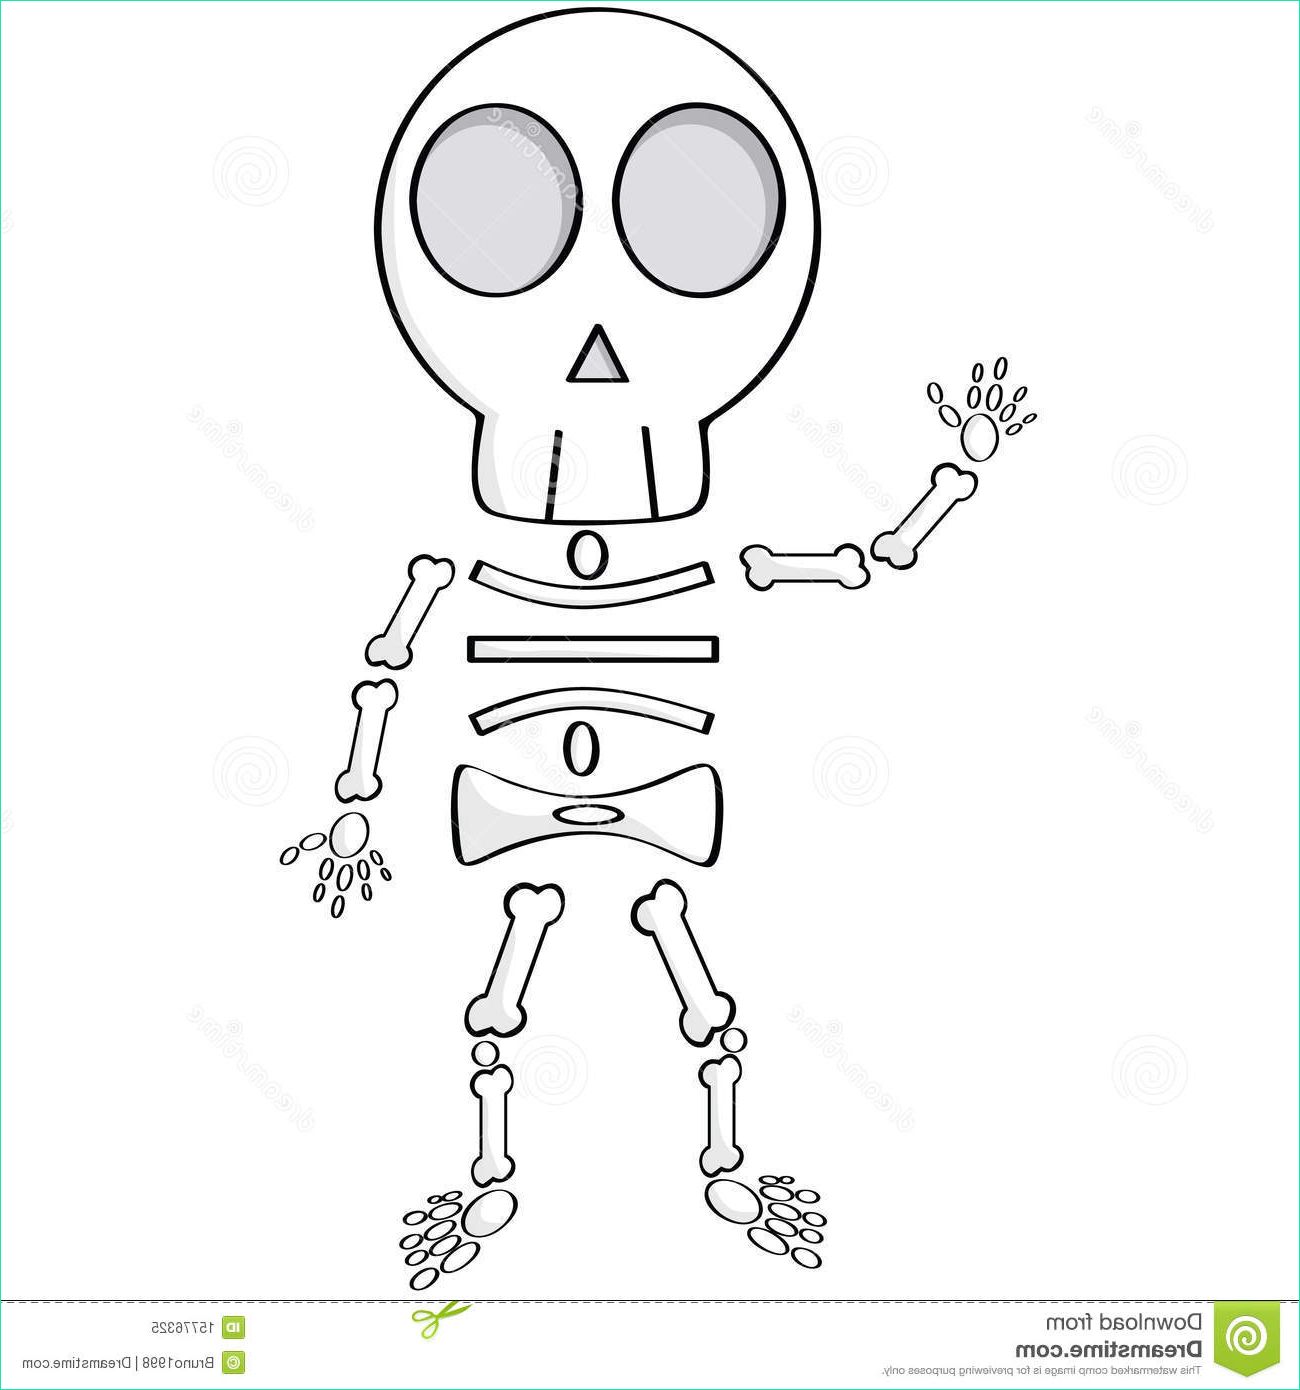 royalty free stock photo cartoon skeleton image